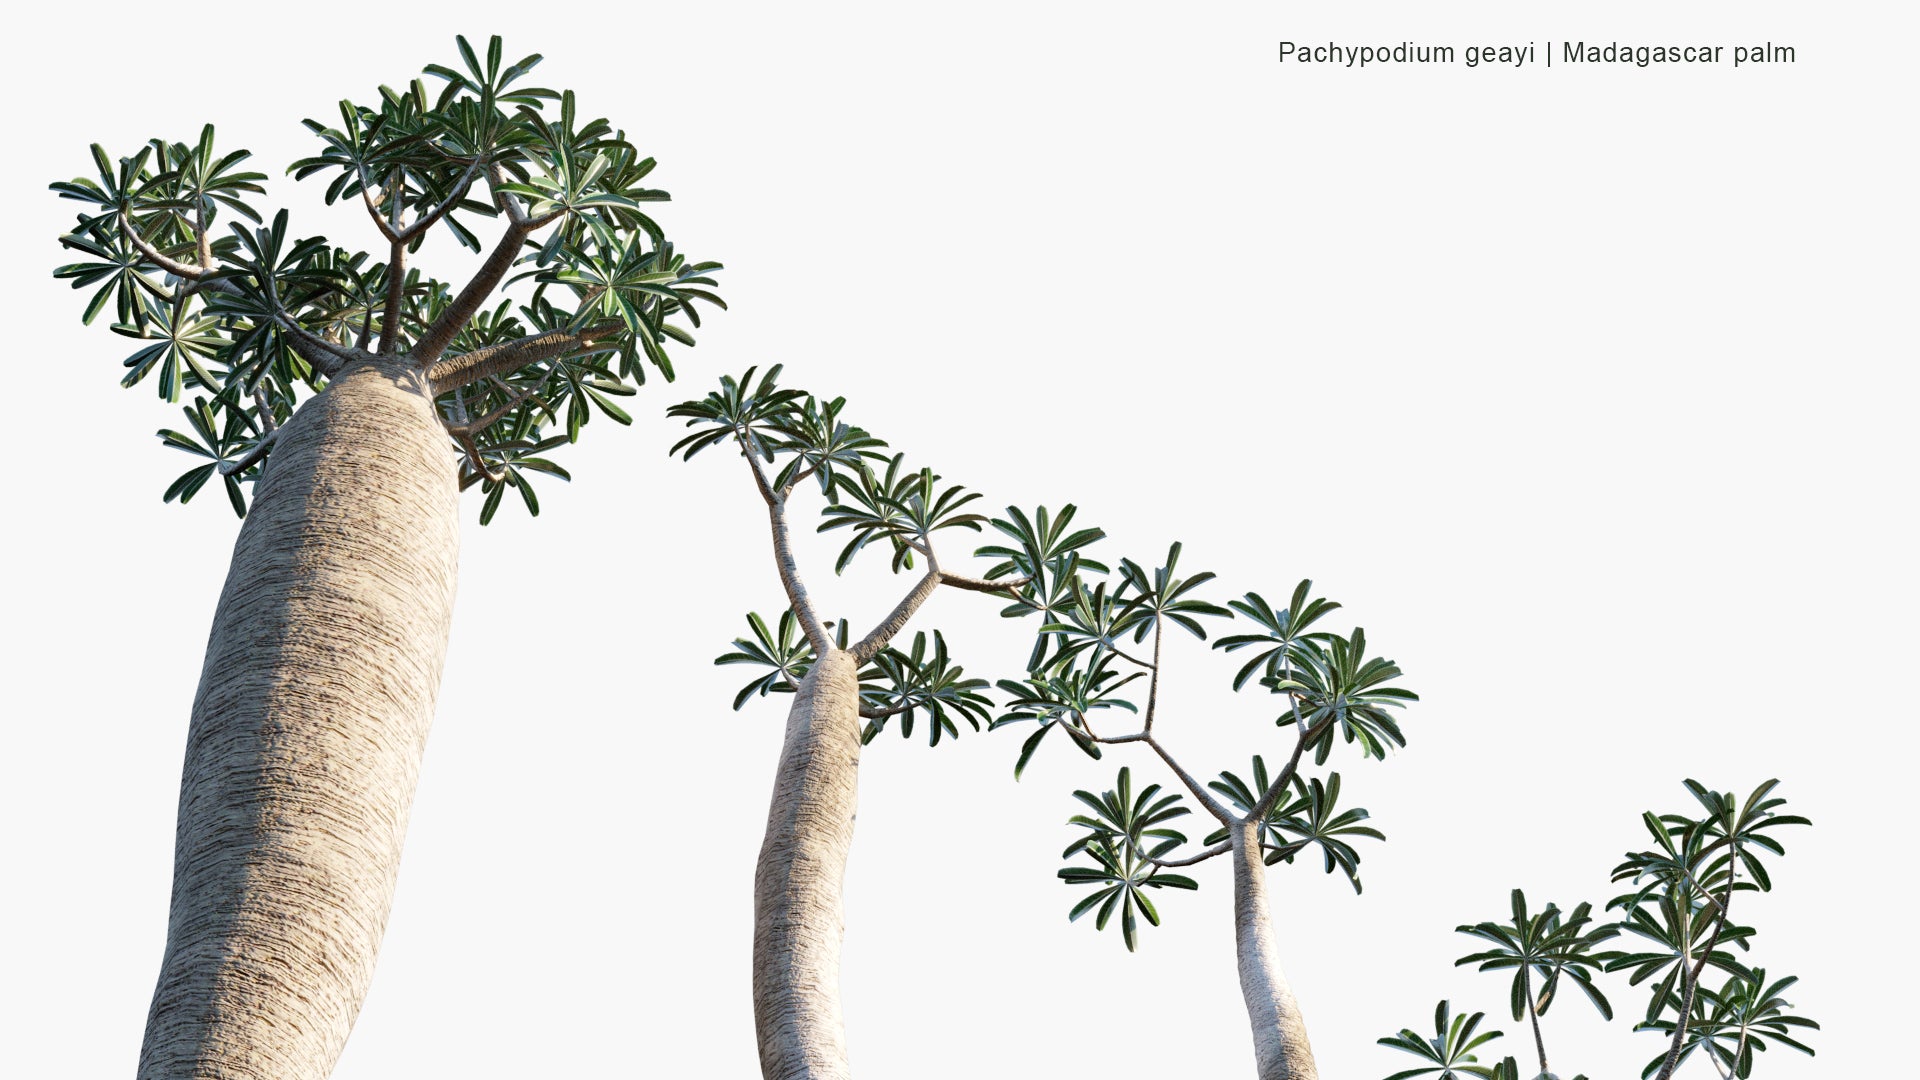 Low Poly Pachypodium Geayi - Madagascar Palm (3D Model)